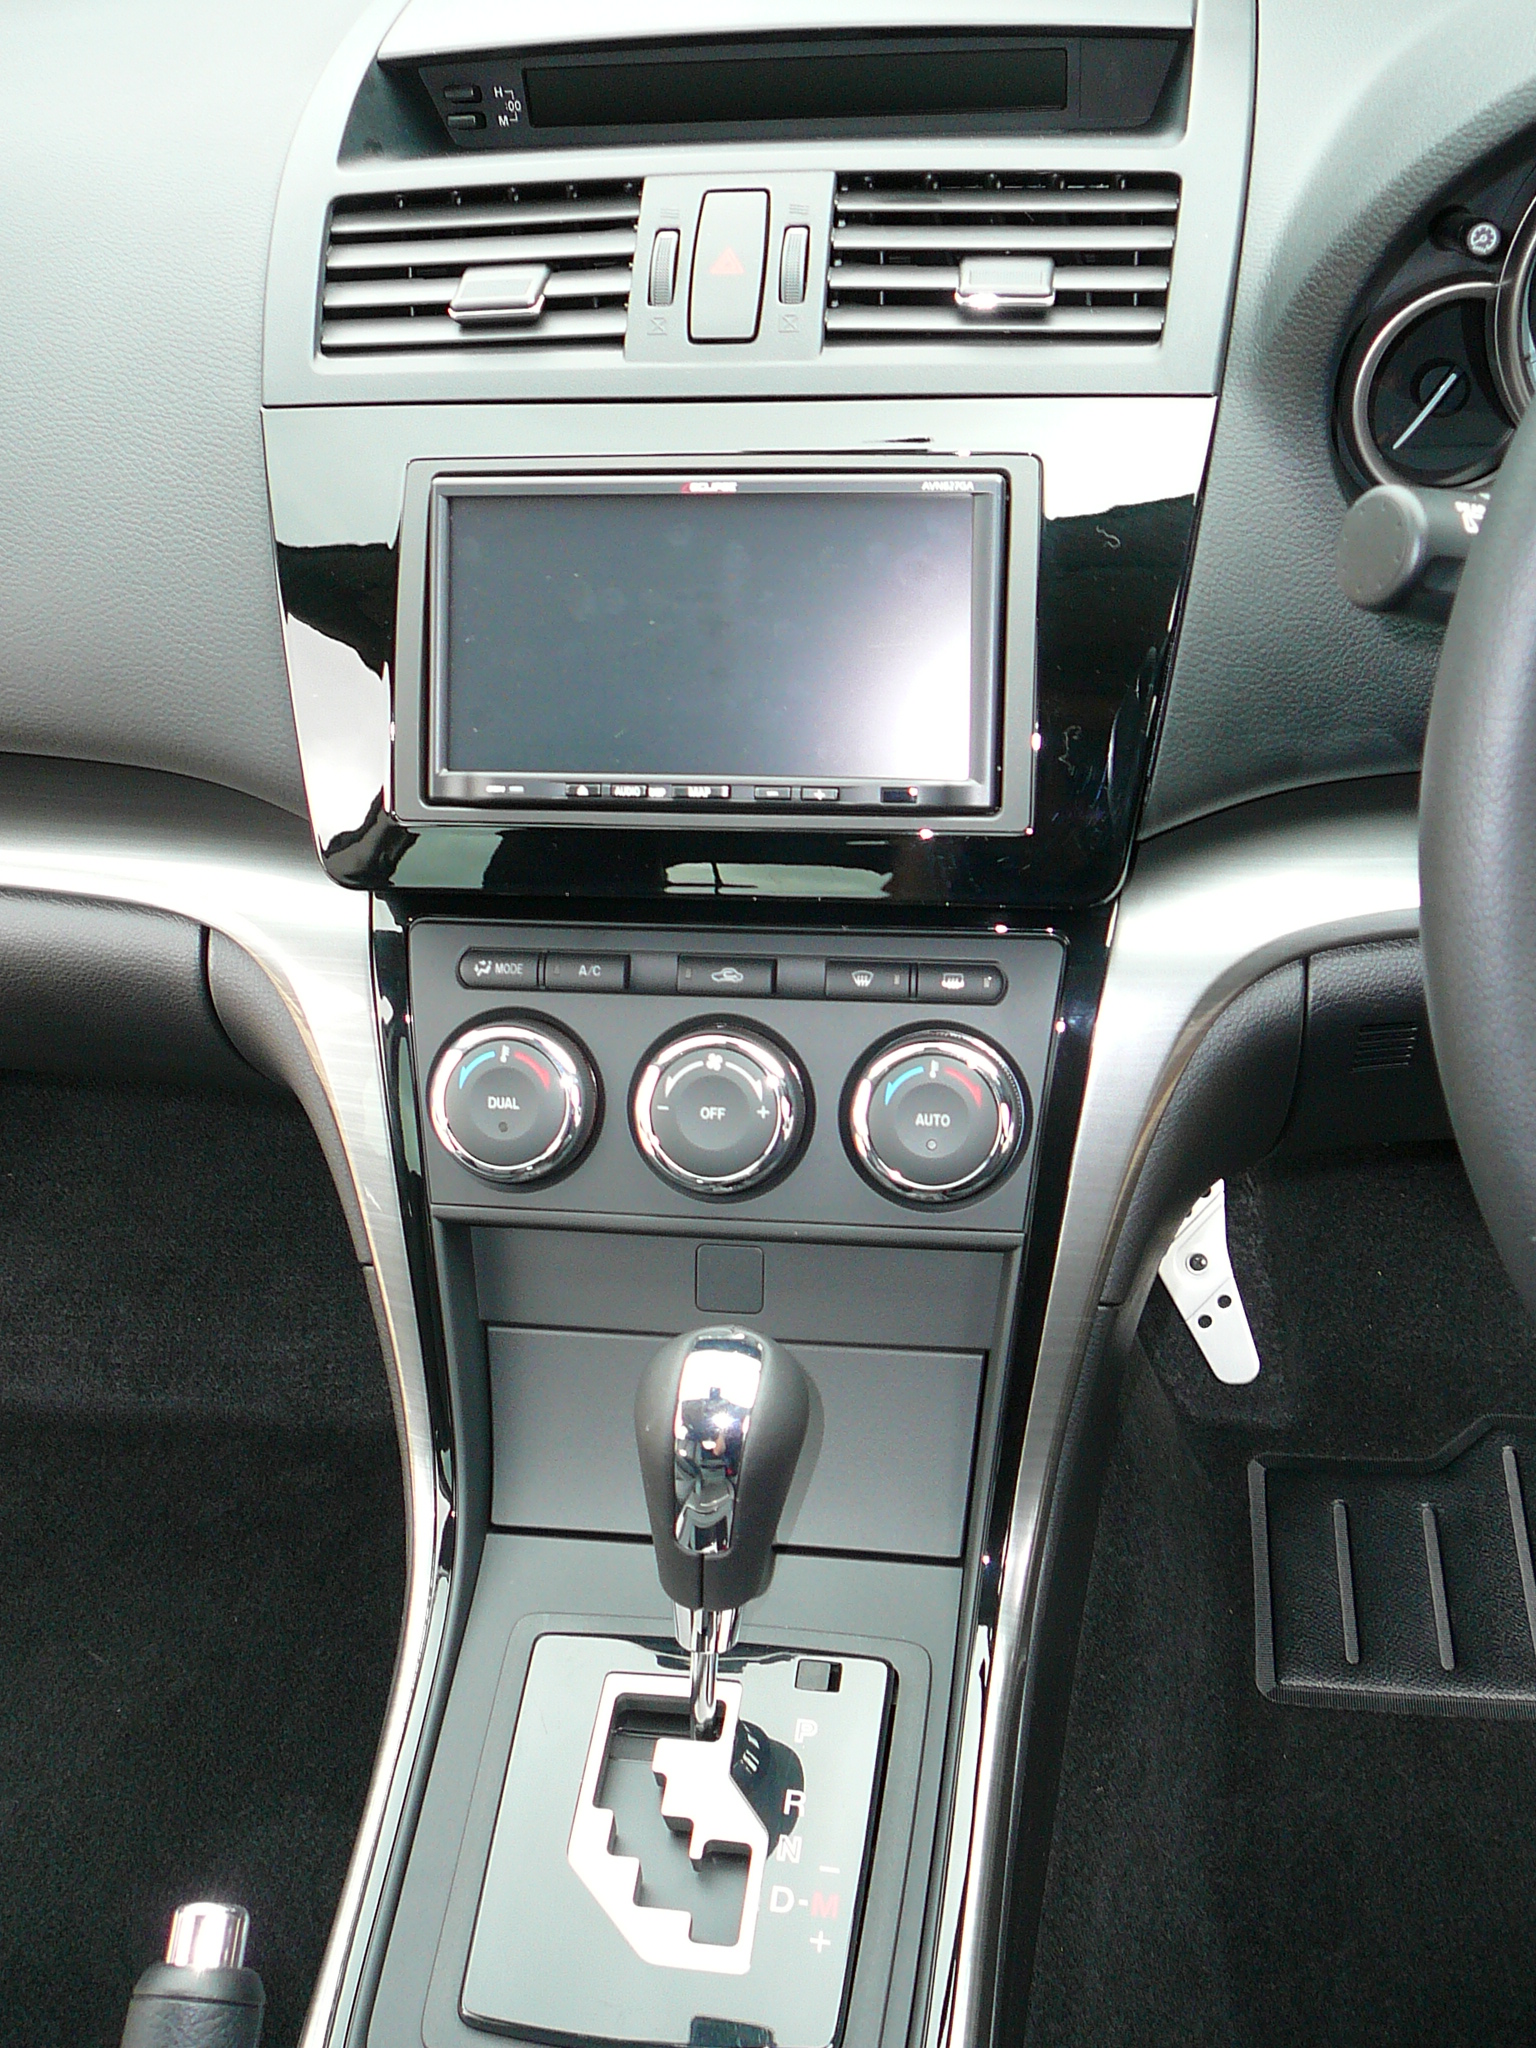 Mazda 6 2011 Navigation Upgrade